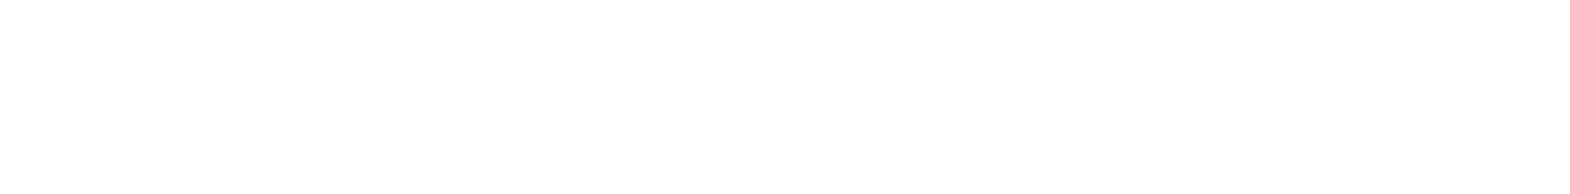 Diploma plc logo large for dark backgrounds (transparent PNG)